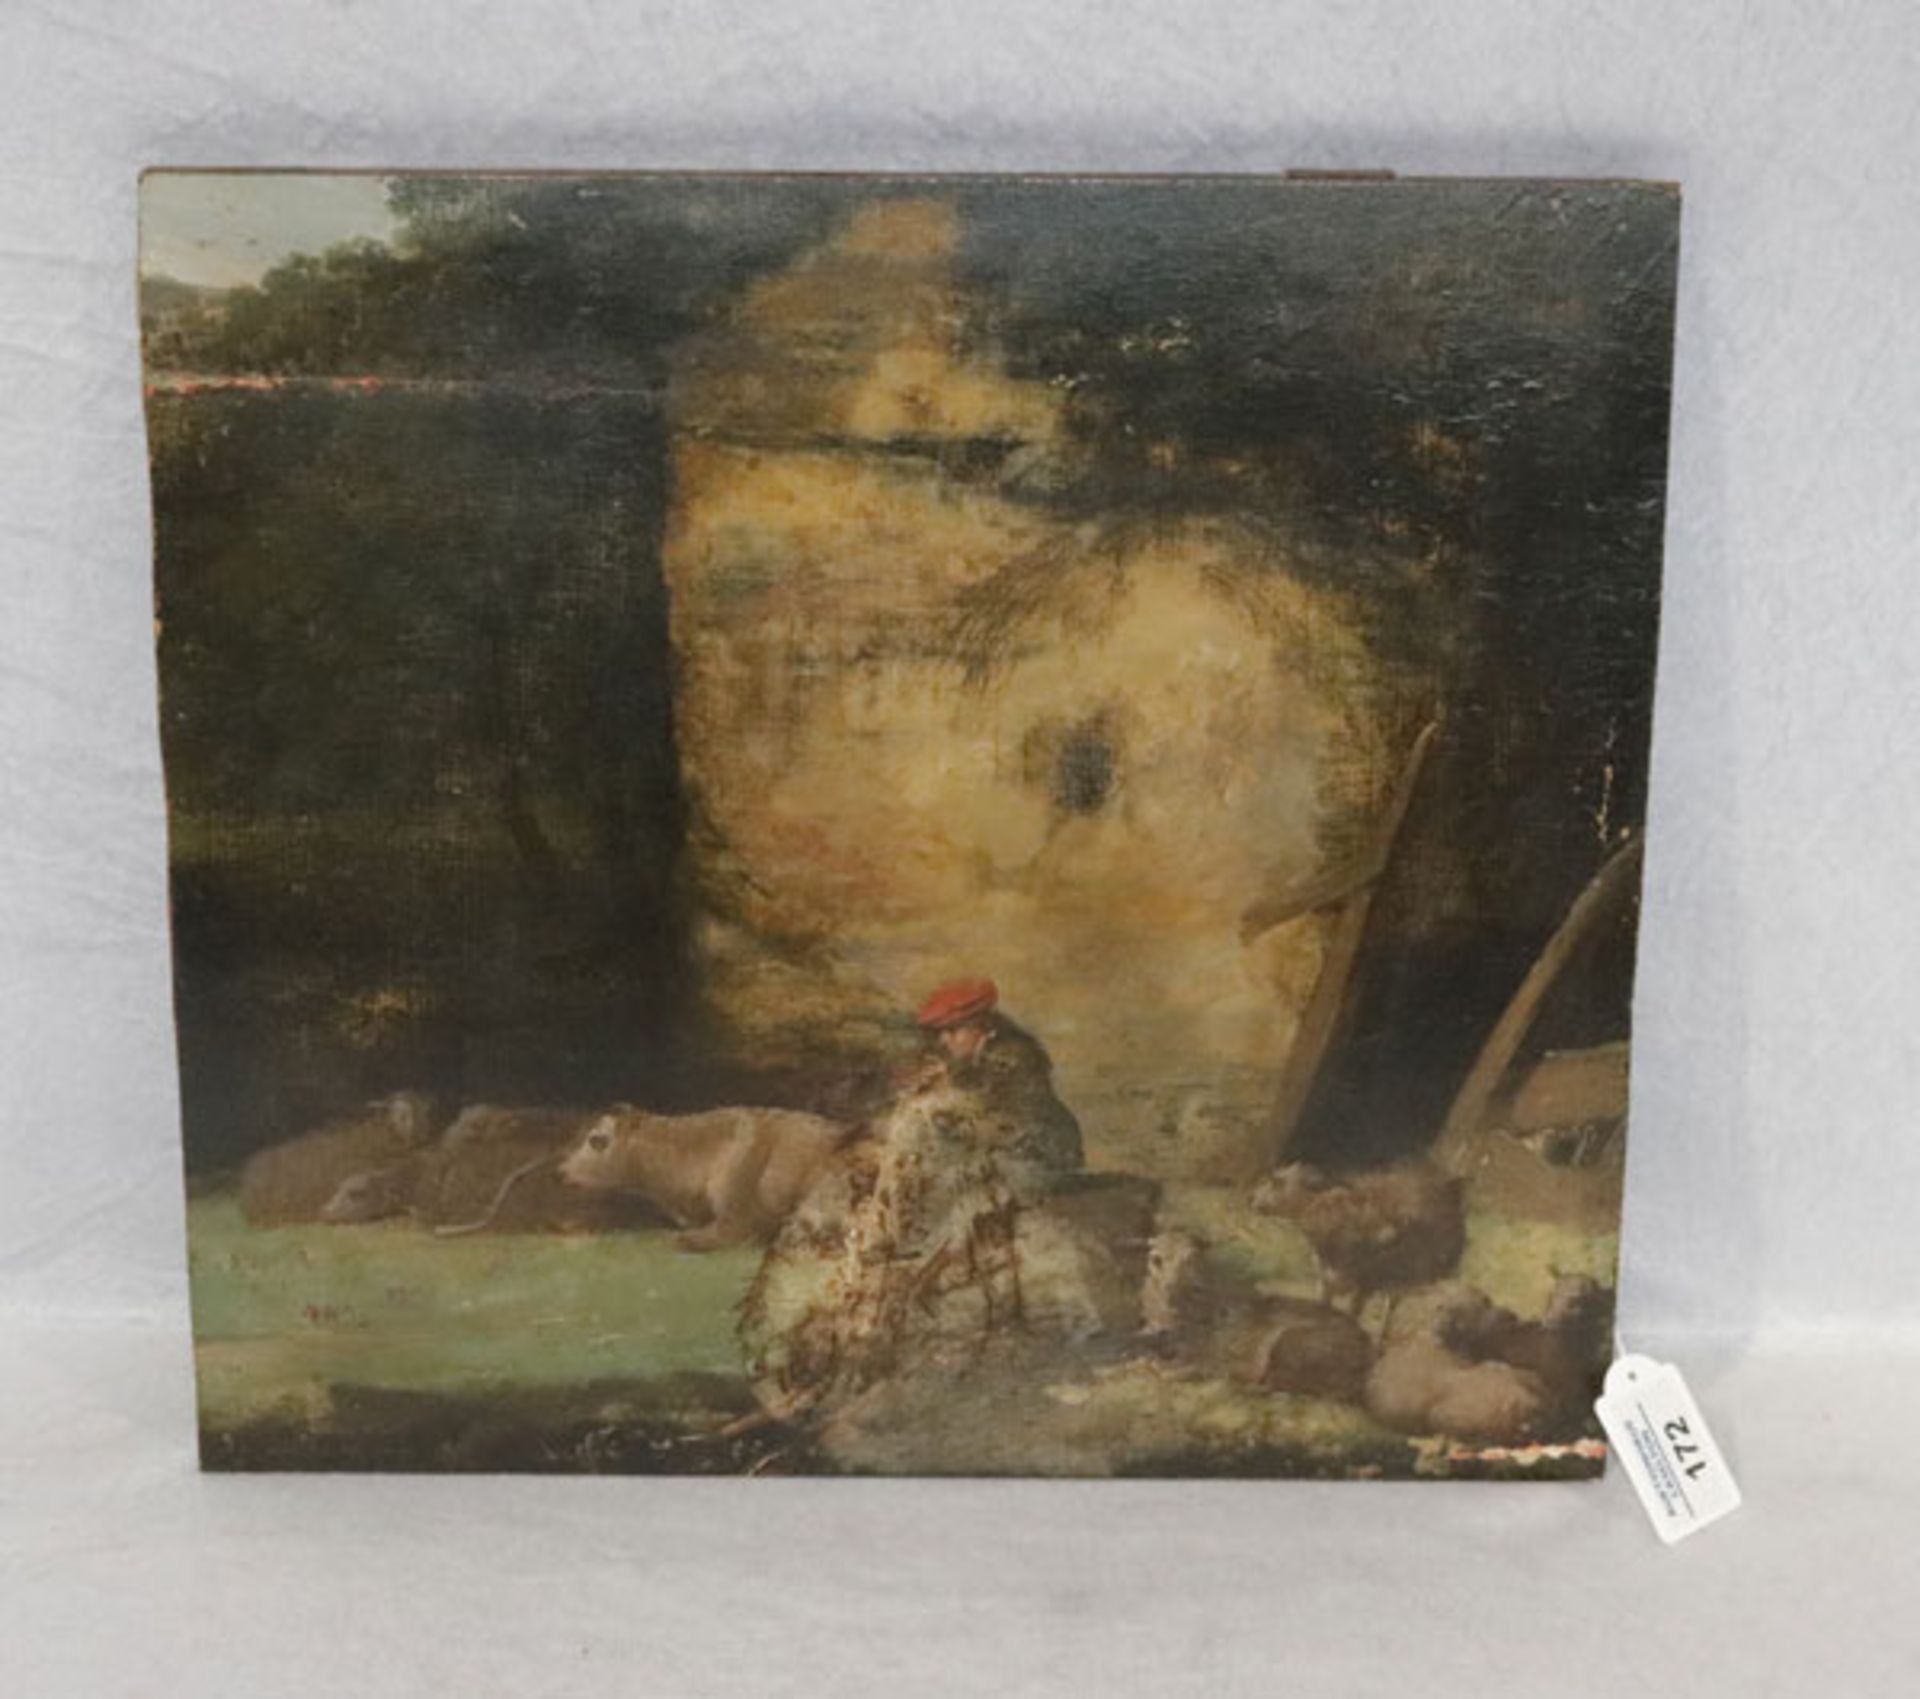 Gemälde ÖL/Holz 'Tierhirte', um 1800, Bildoberfläche beschädigt, ohne Rahmen 36 cm x 39 cm (00139)